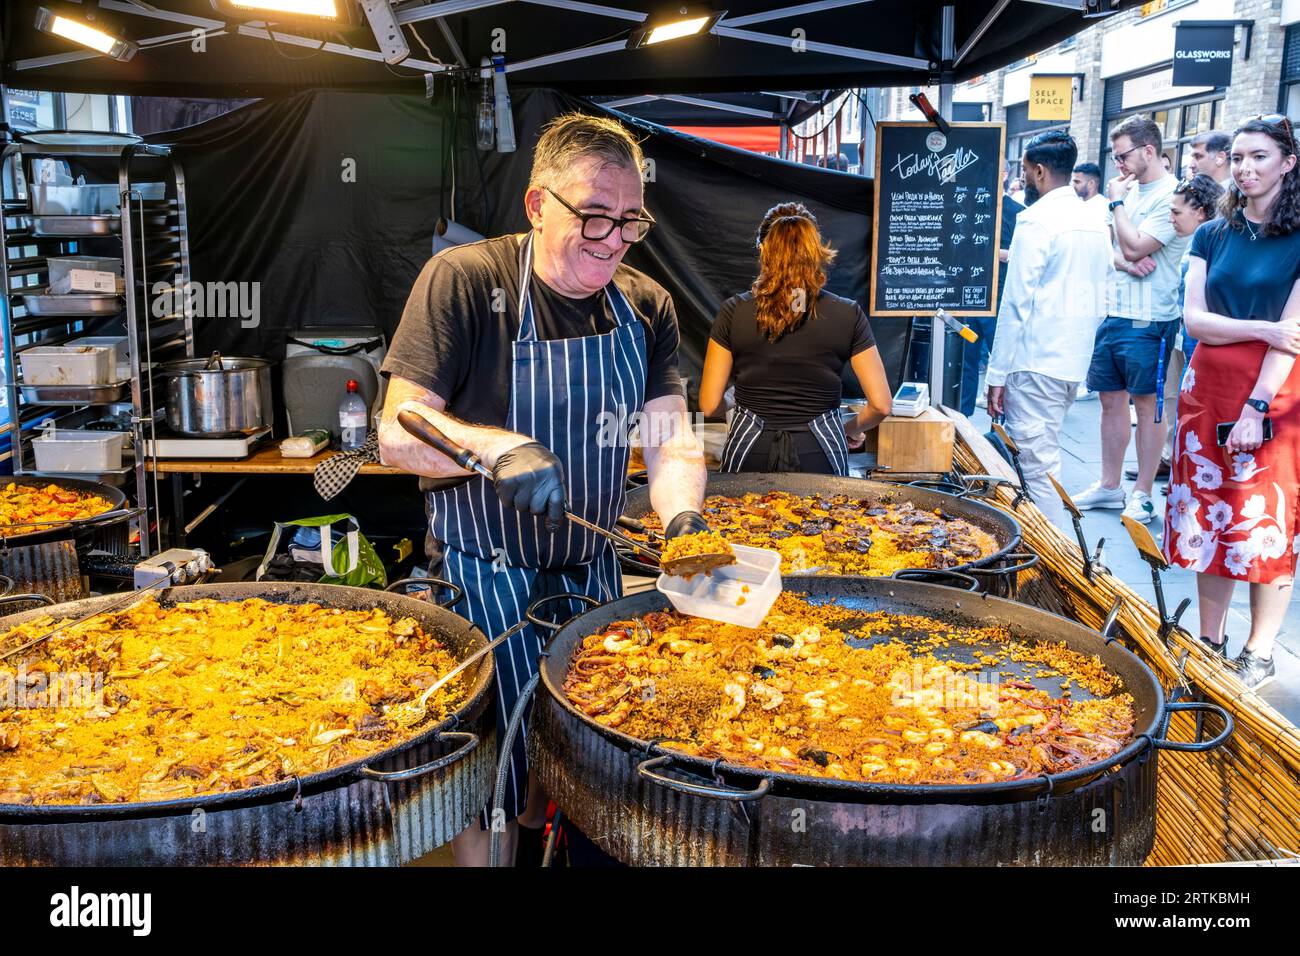 A man Serves Paella at A Street Food Stall, Berwick Street, London, UK. Stockfoto